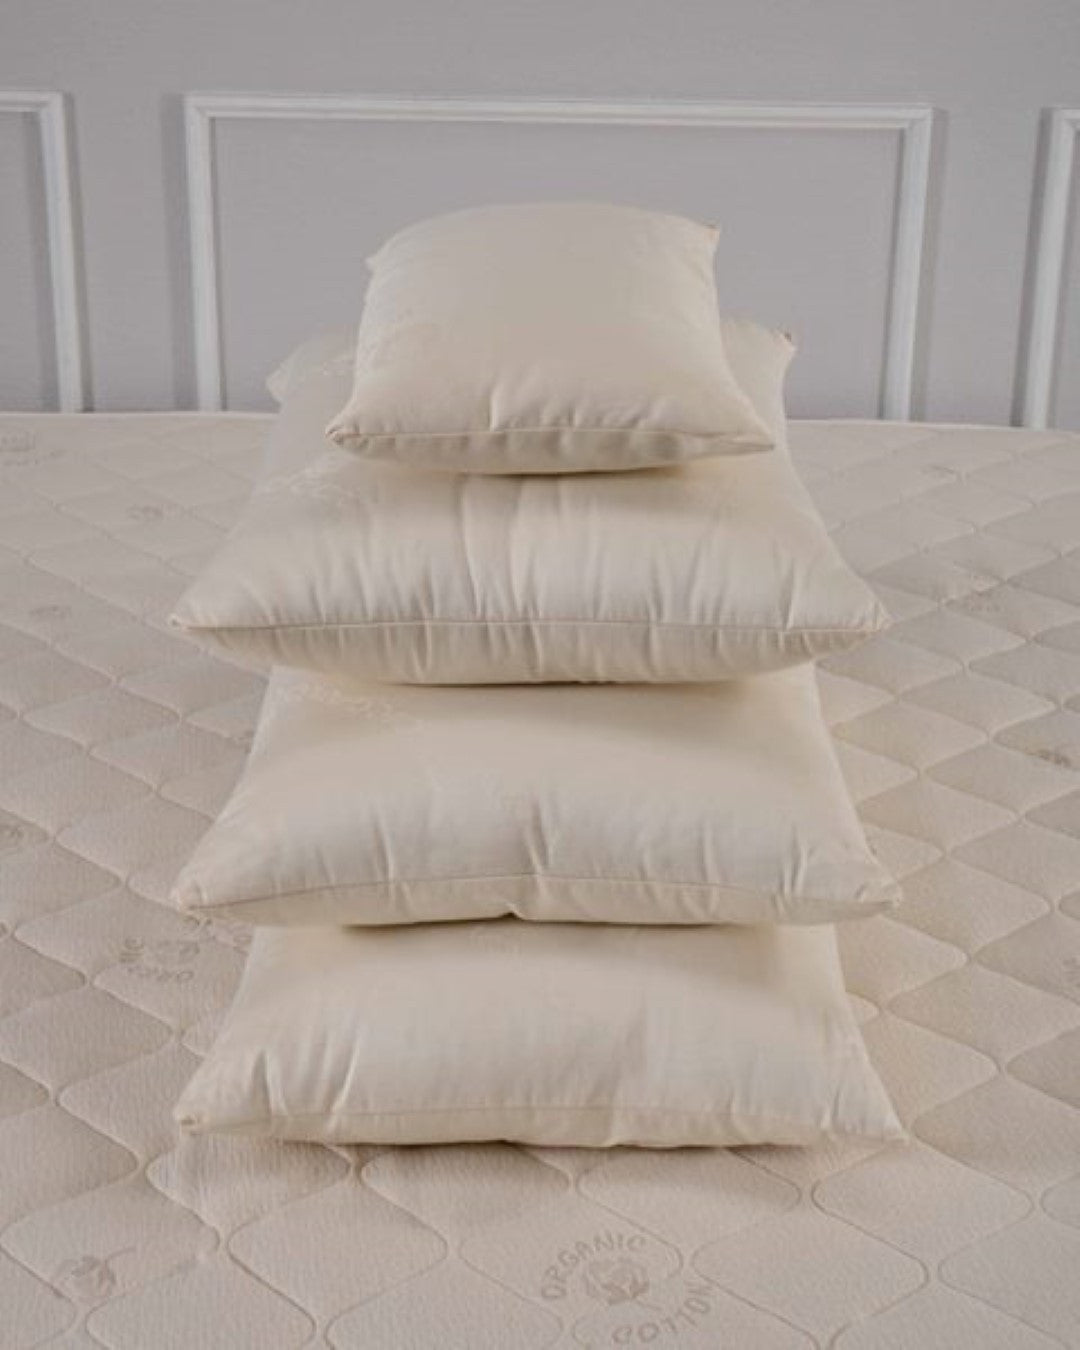 Pillow – Certified Organic Cotton – various sizes